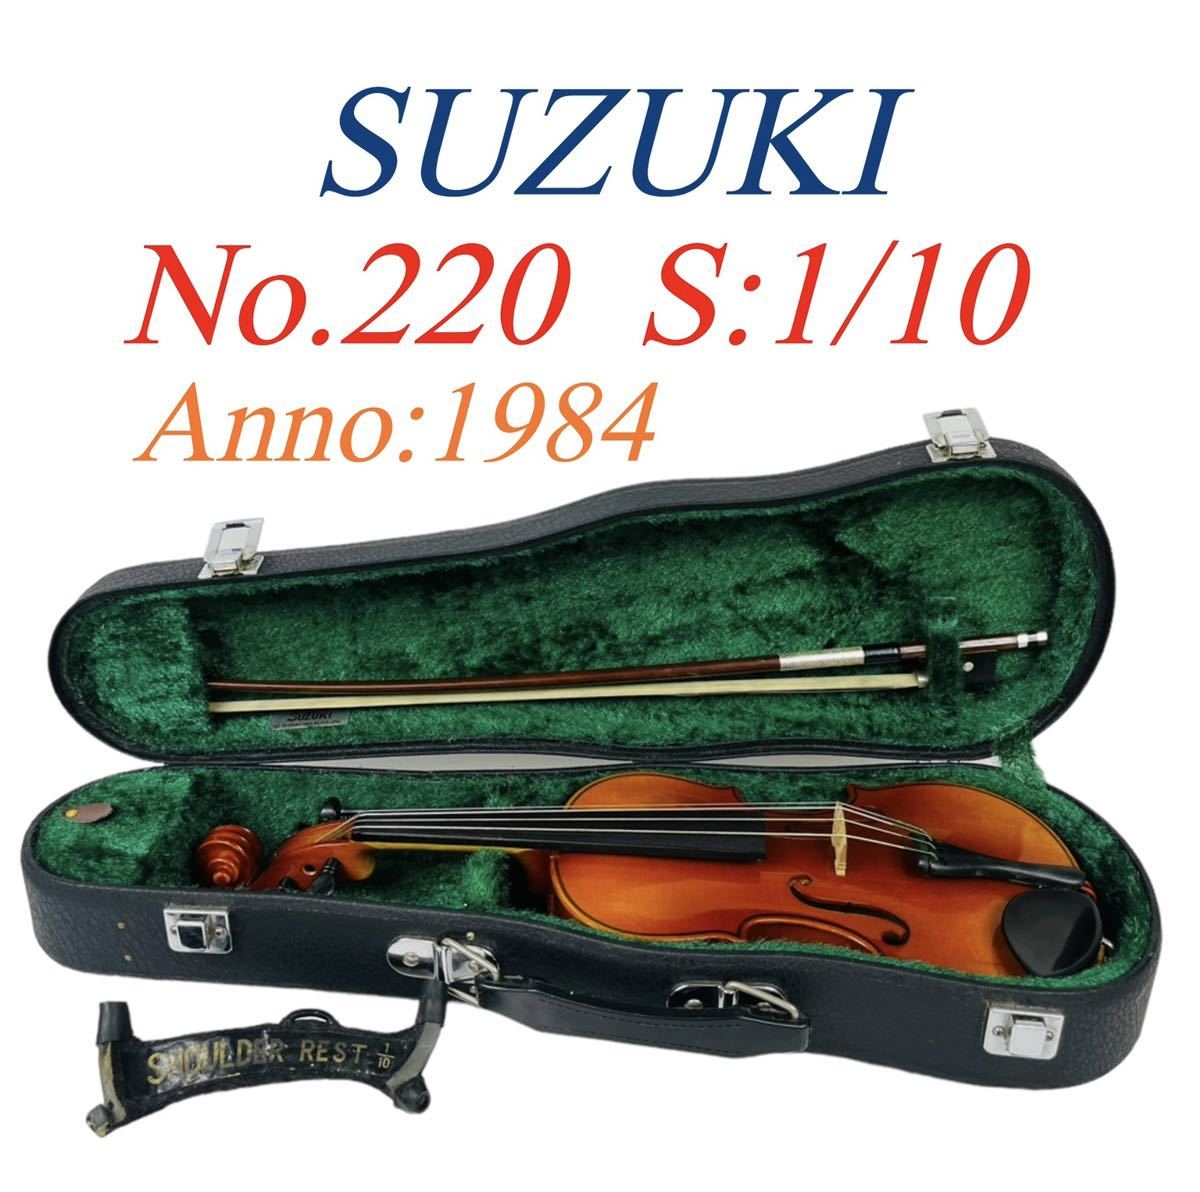 SUZUKI スズキ 弦楽器 Violin バイオリン No.220 サイズ:1/4 Anno:1984